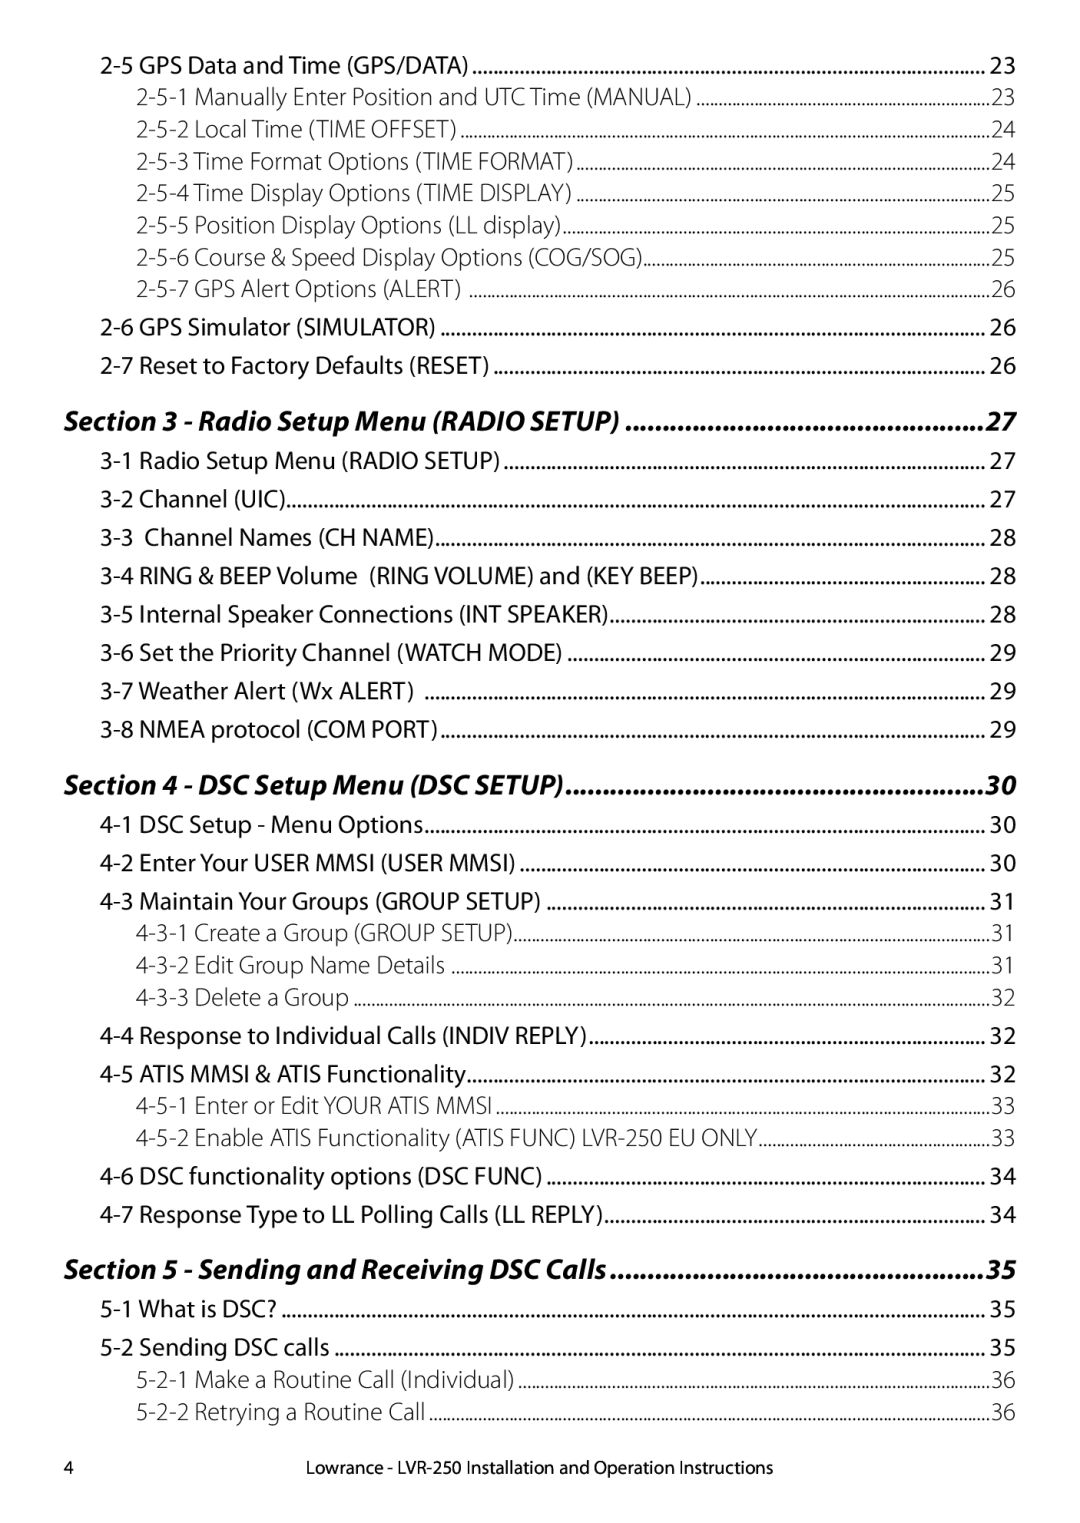 Lowrance electronic LVR-250 manual Radio Setup Menu RADIO SETUP, DSC Setup Menu DSC SETUP, Sending and Receiving DSC Calls 